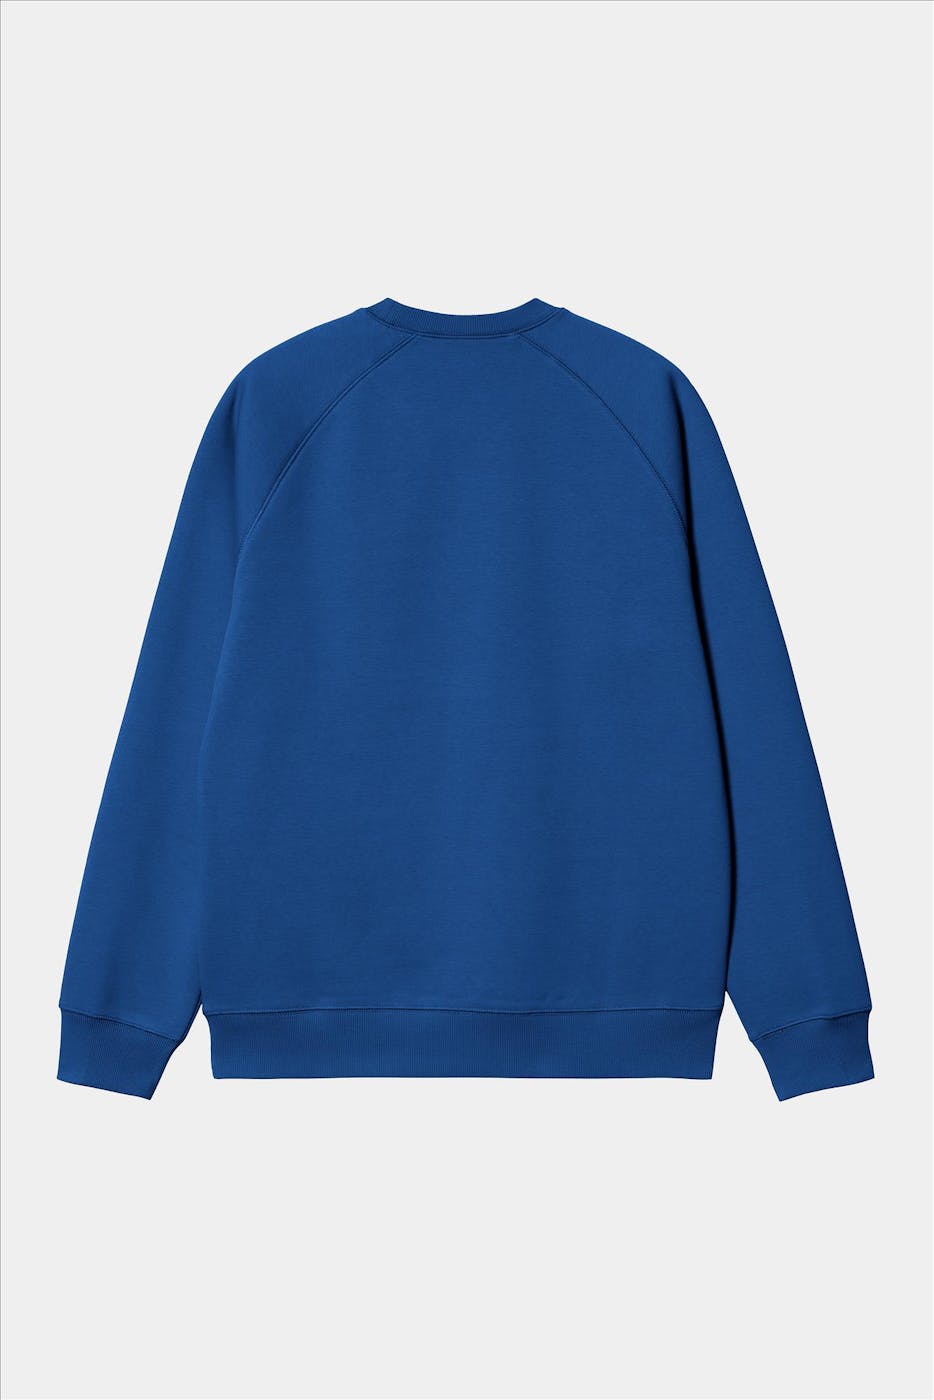 Carhartt WIP - Kobaltblauwe Chase sweater